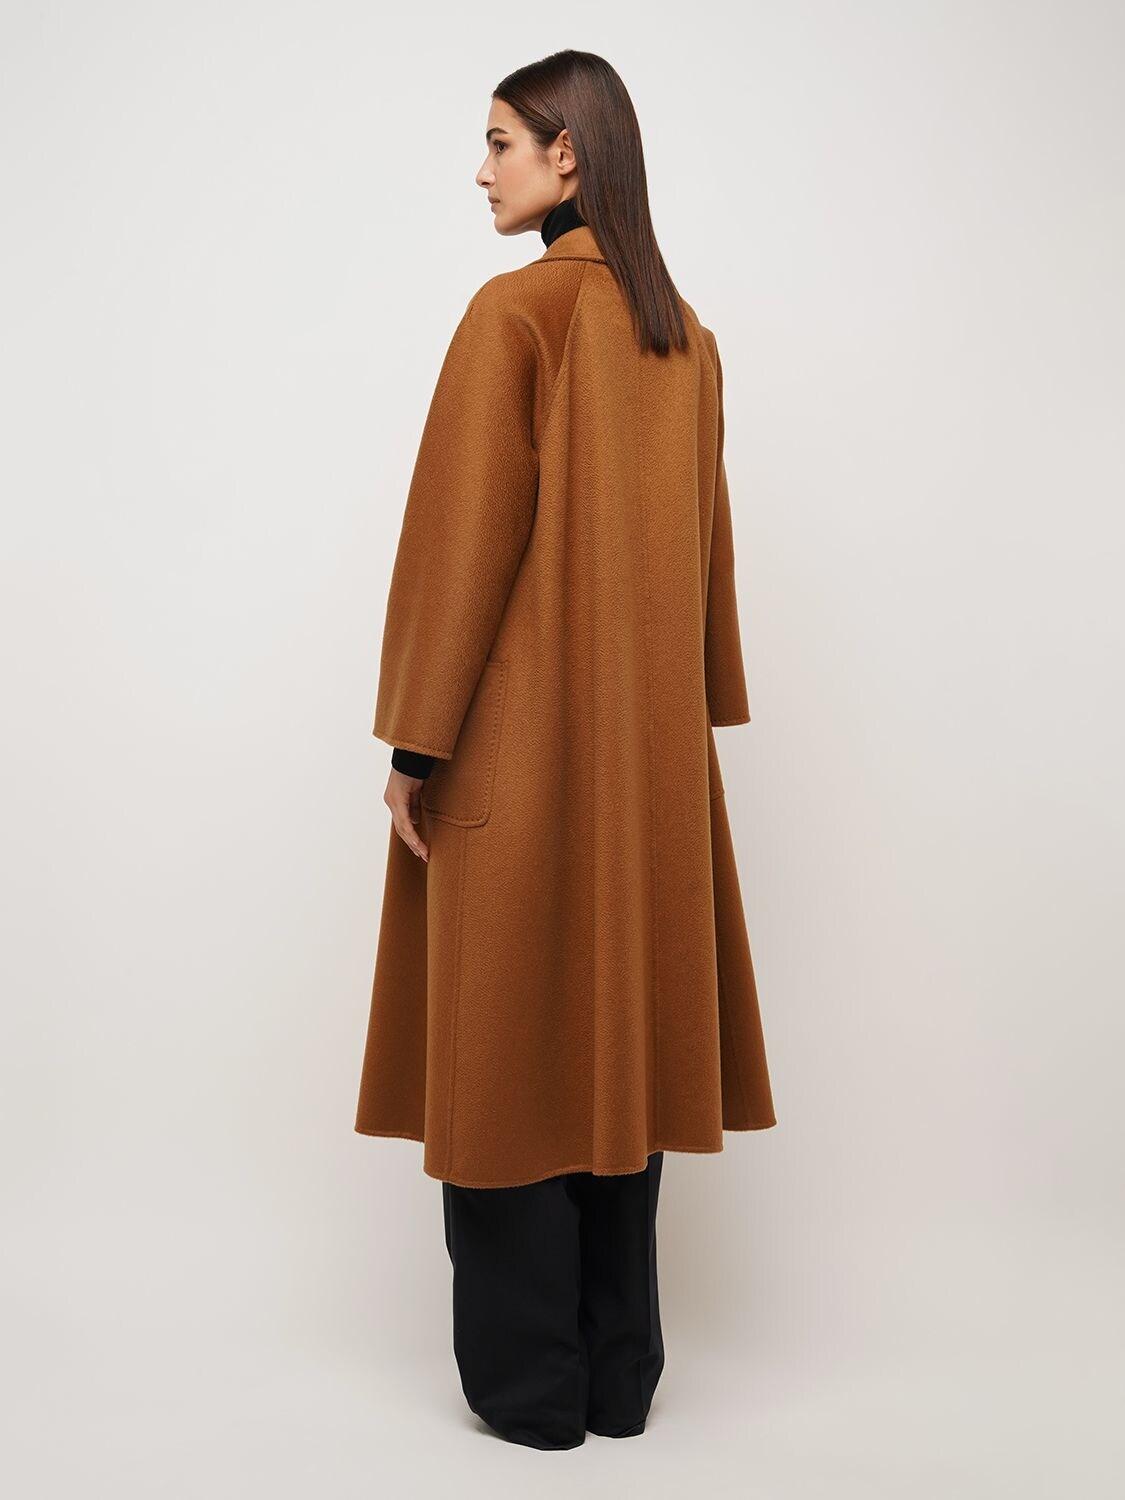 Max Mara Women's Brown Labbro Cashmere Coat - Save 52% | Lyst